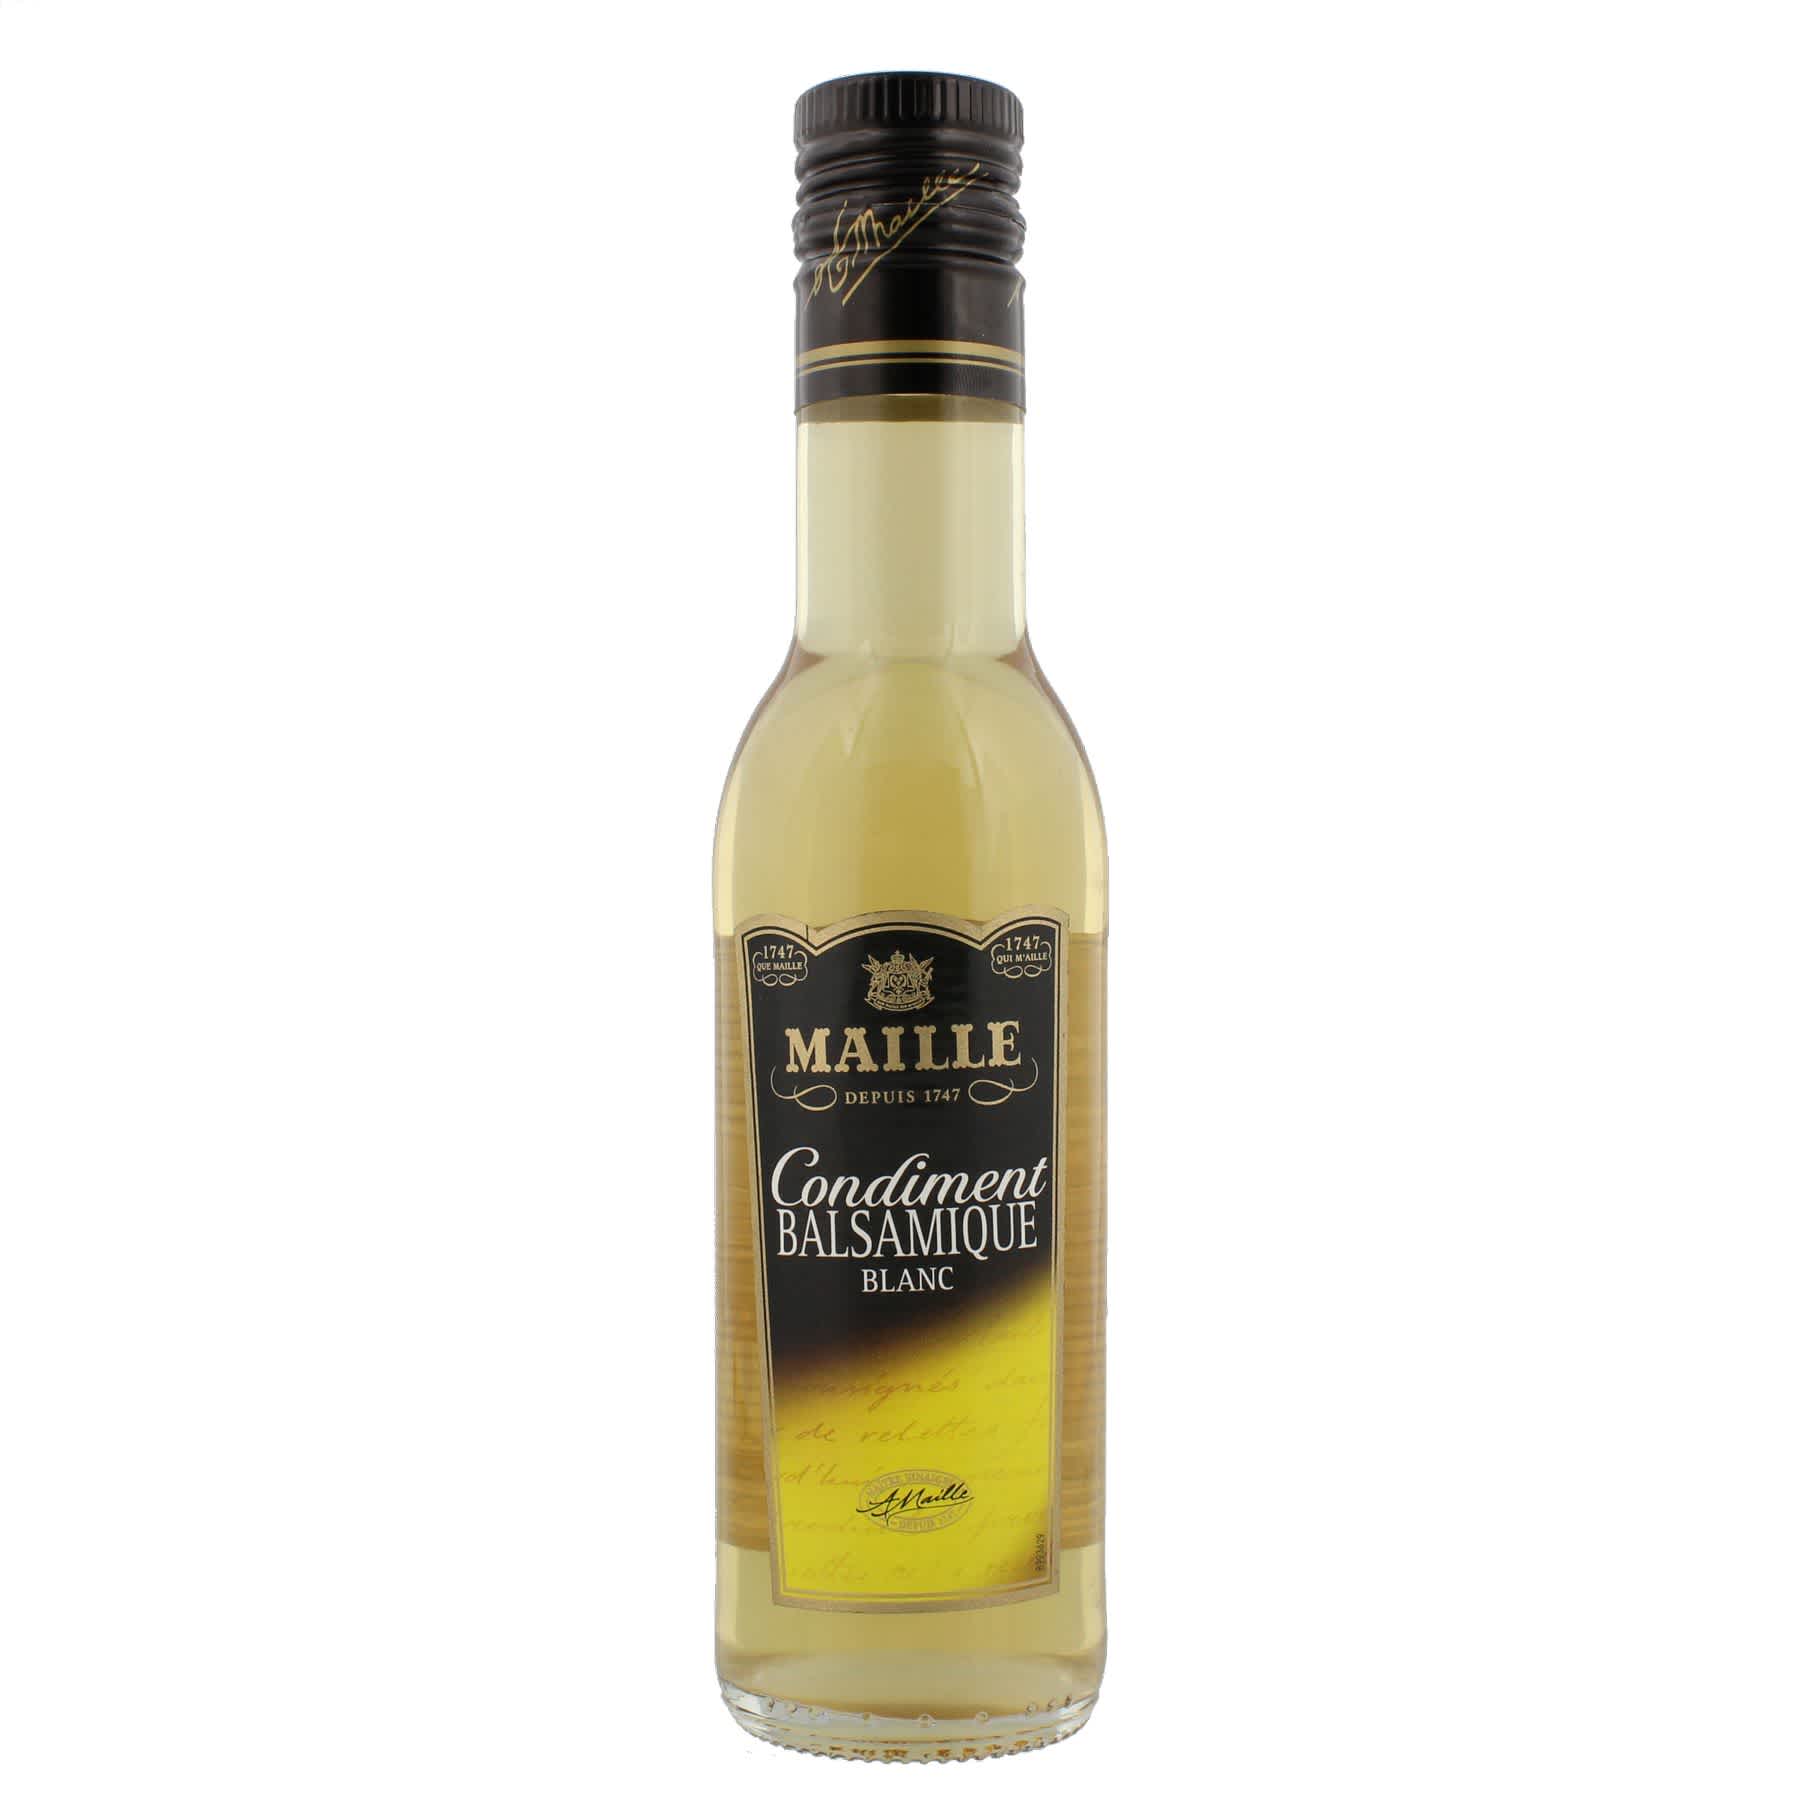 Maille - Condiment balsamique blanc, 250 ml